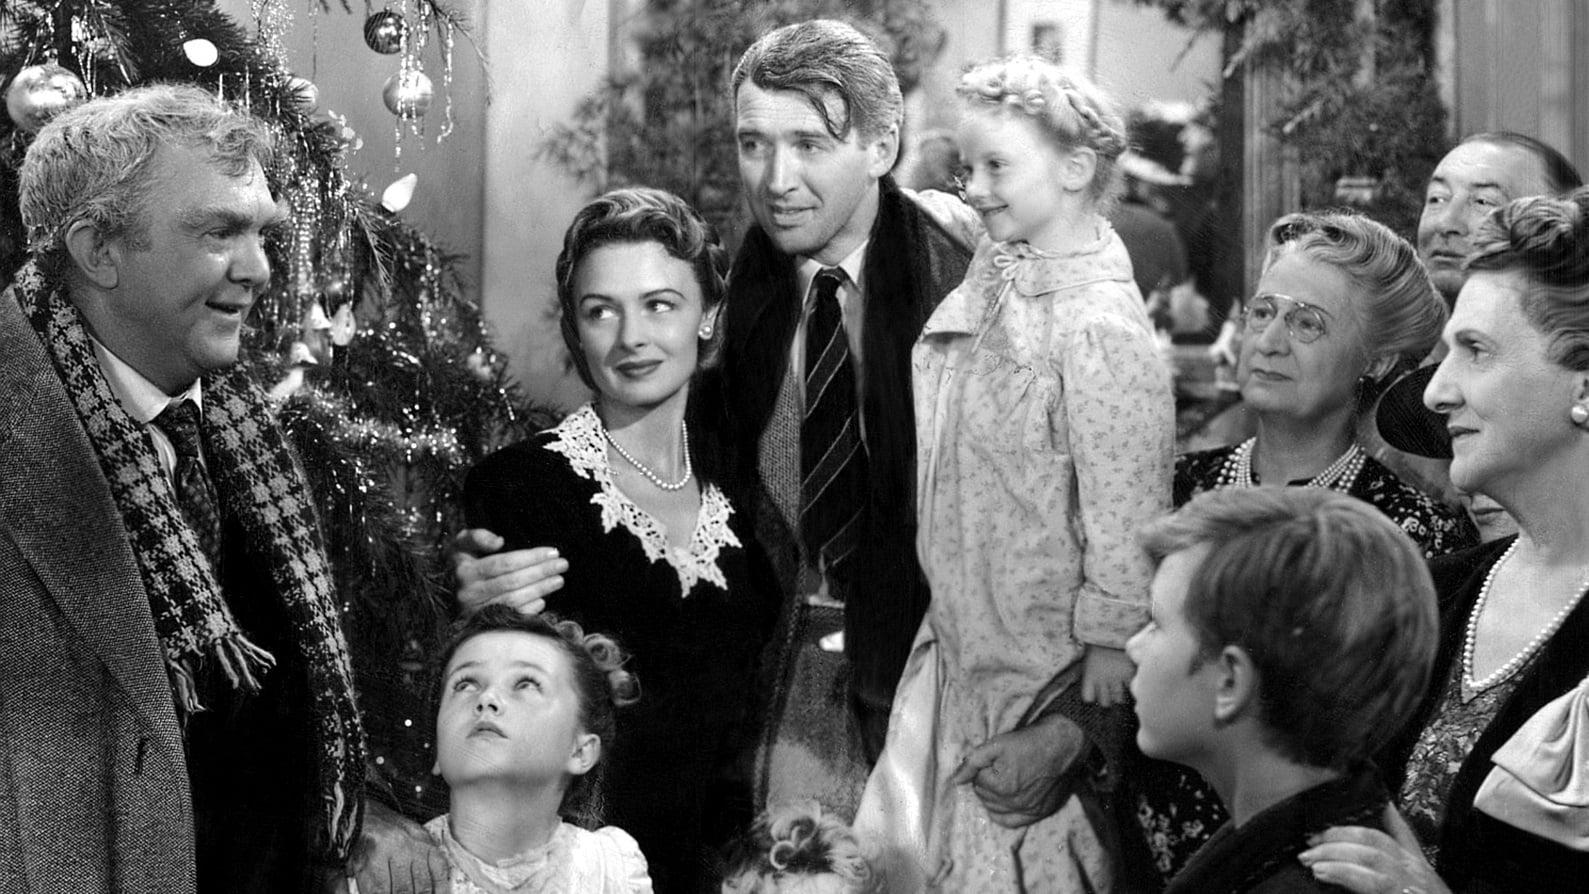 Stream classic fan-favorite Christmas films like It's a Wonderful Life this 2022 holiday season.